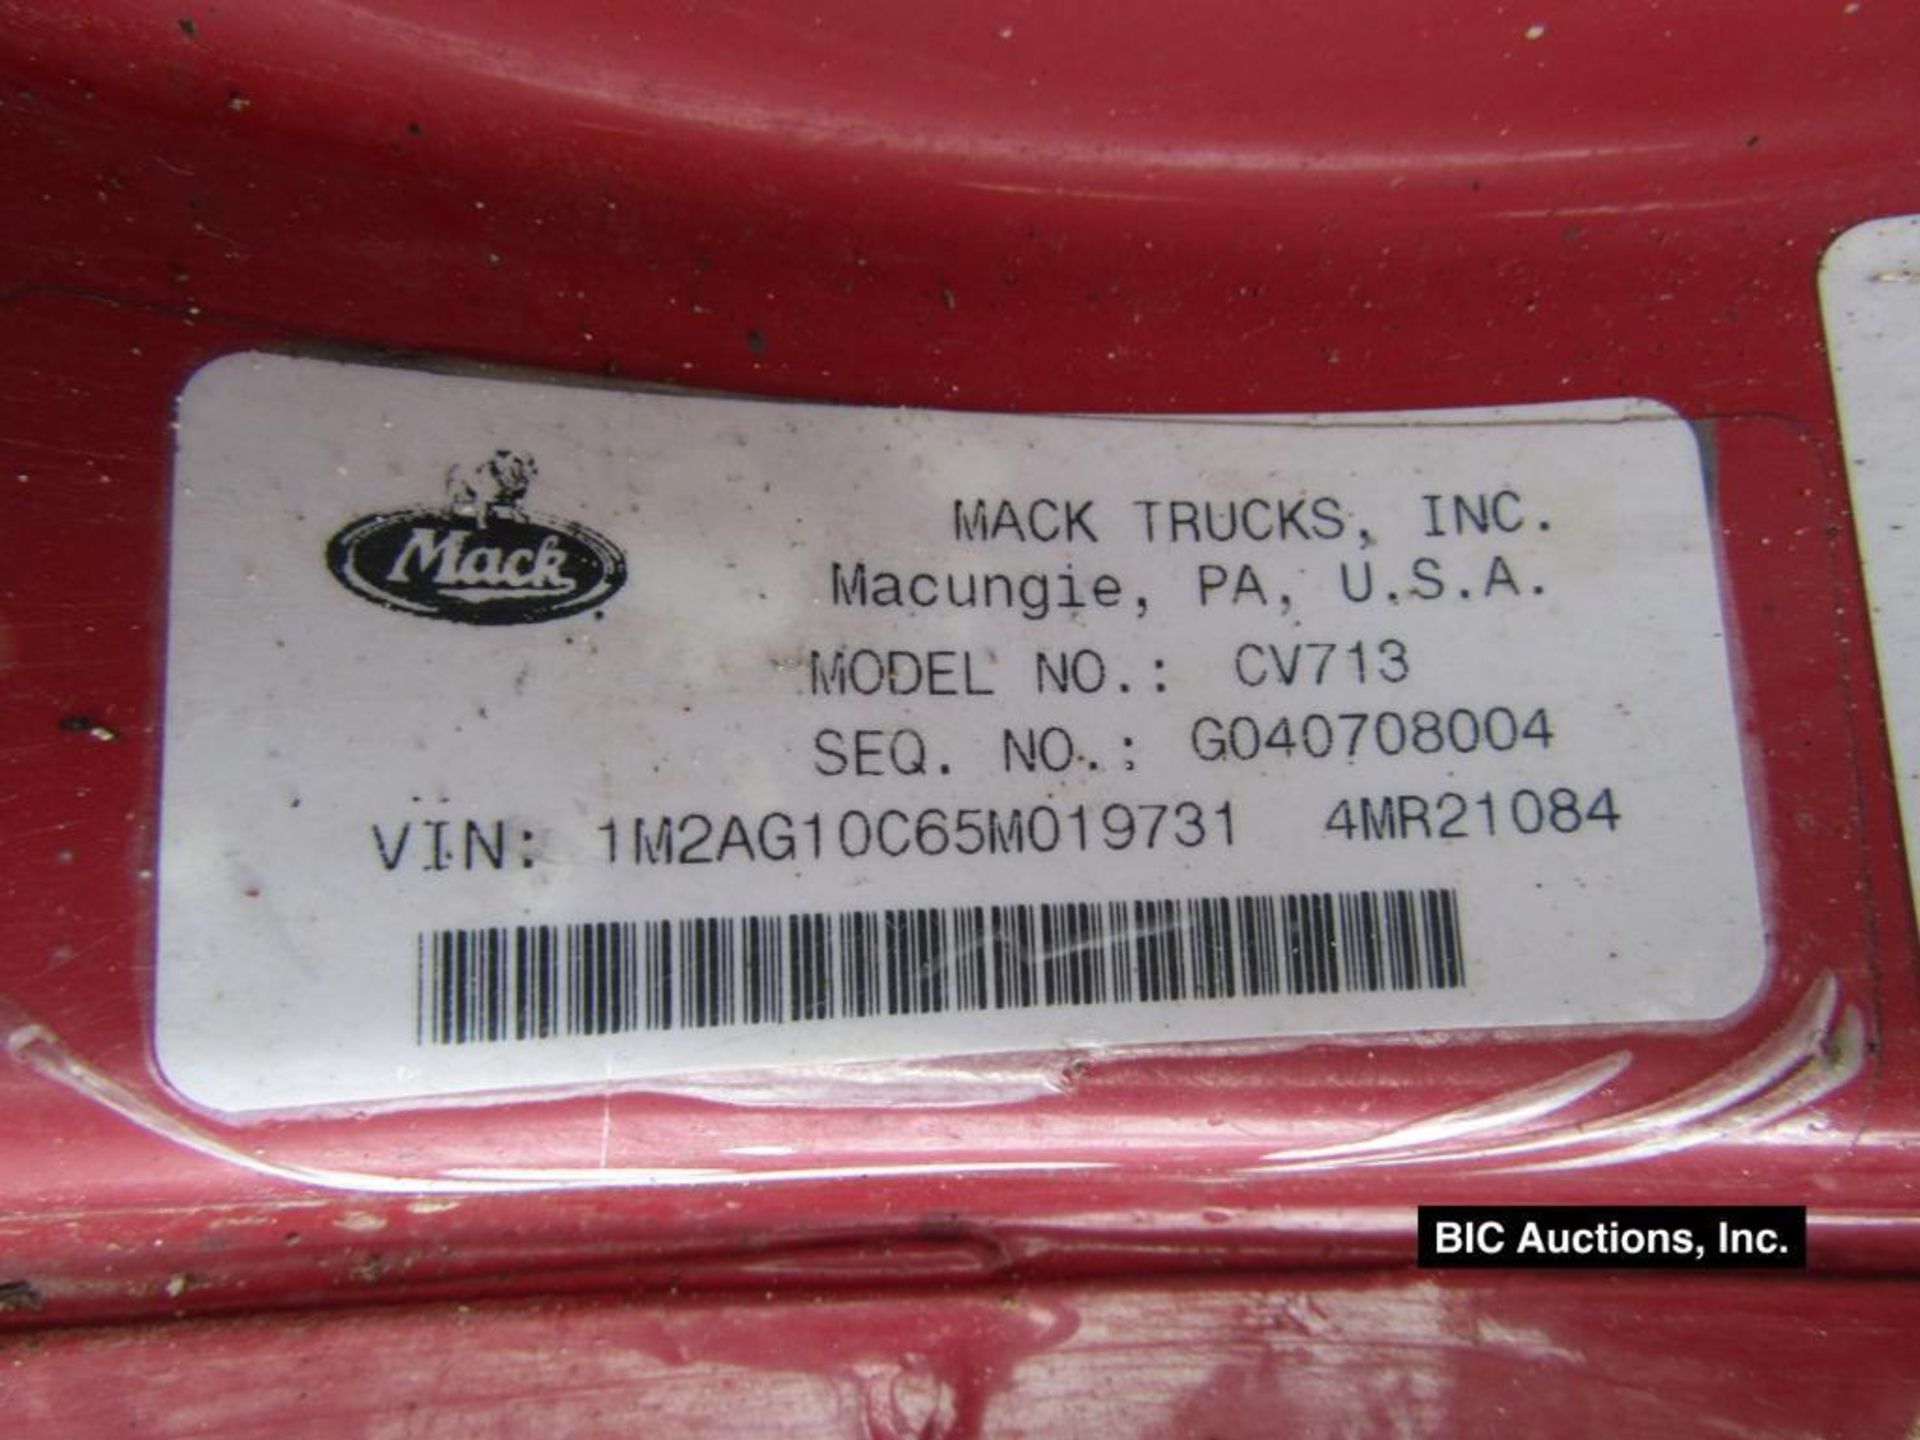 2005 Mack Boom Truck, Model # CV713, VIN # 1M2AG10C65M019731, 393244 Miles, 187974 Hours, Maxitorque - Image 6 of 52